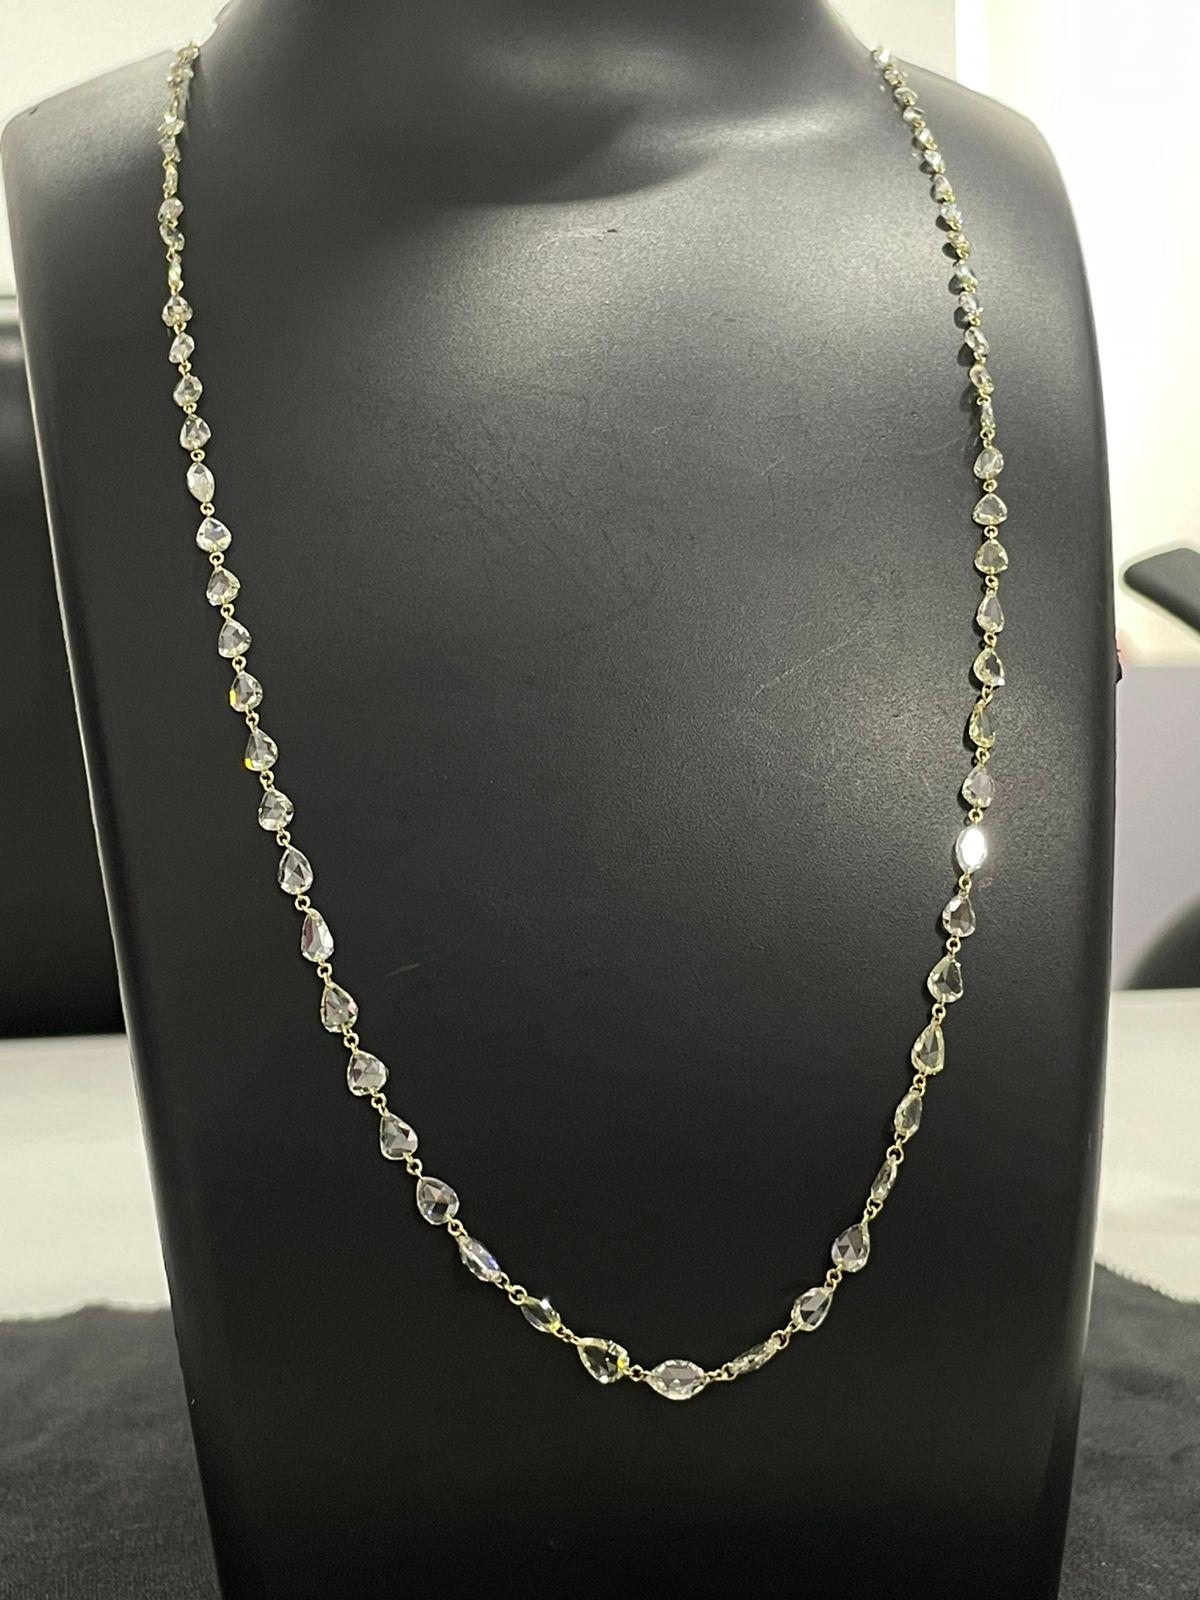 PANIM 11.43 Cts Fancy Rosecut Diamond Necklace in 18 Karat White Gold For Sale 5